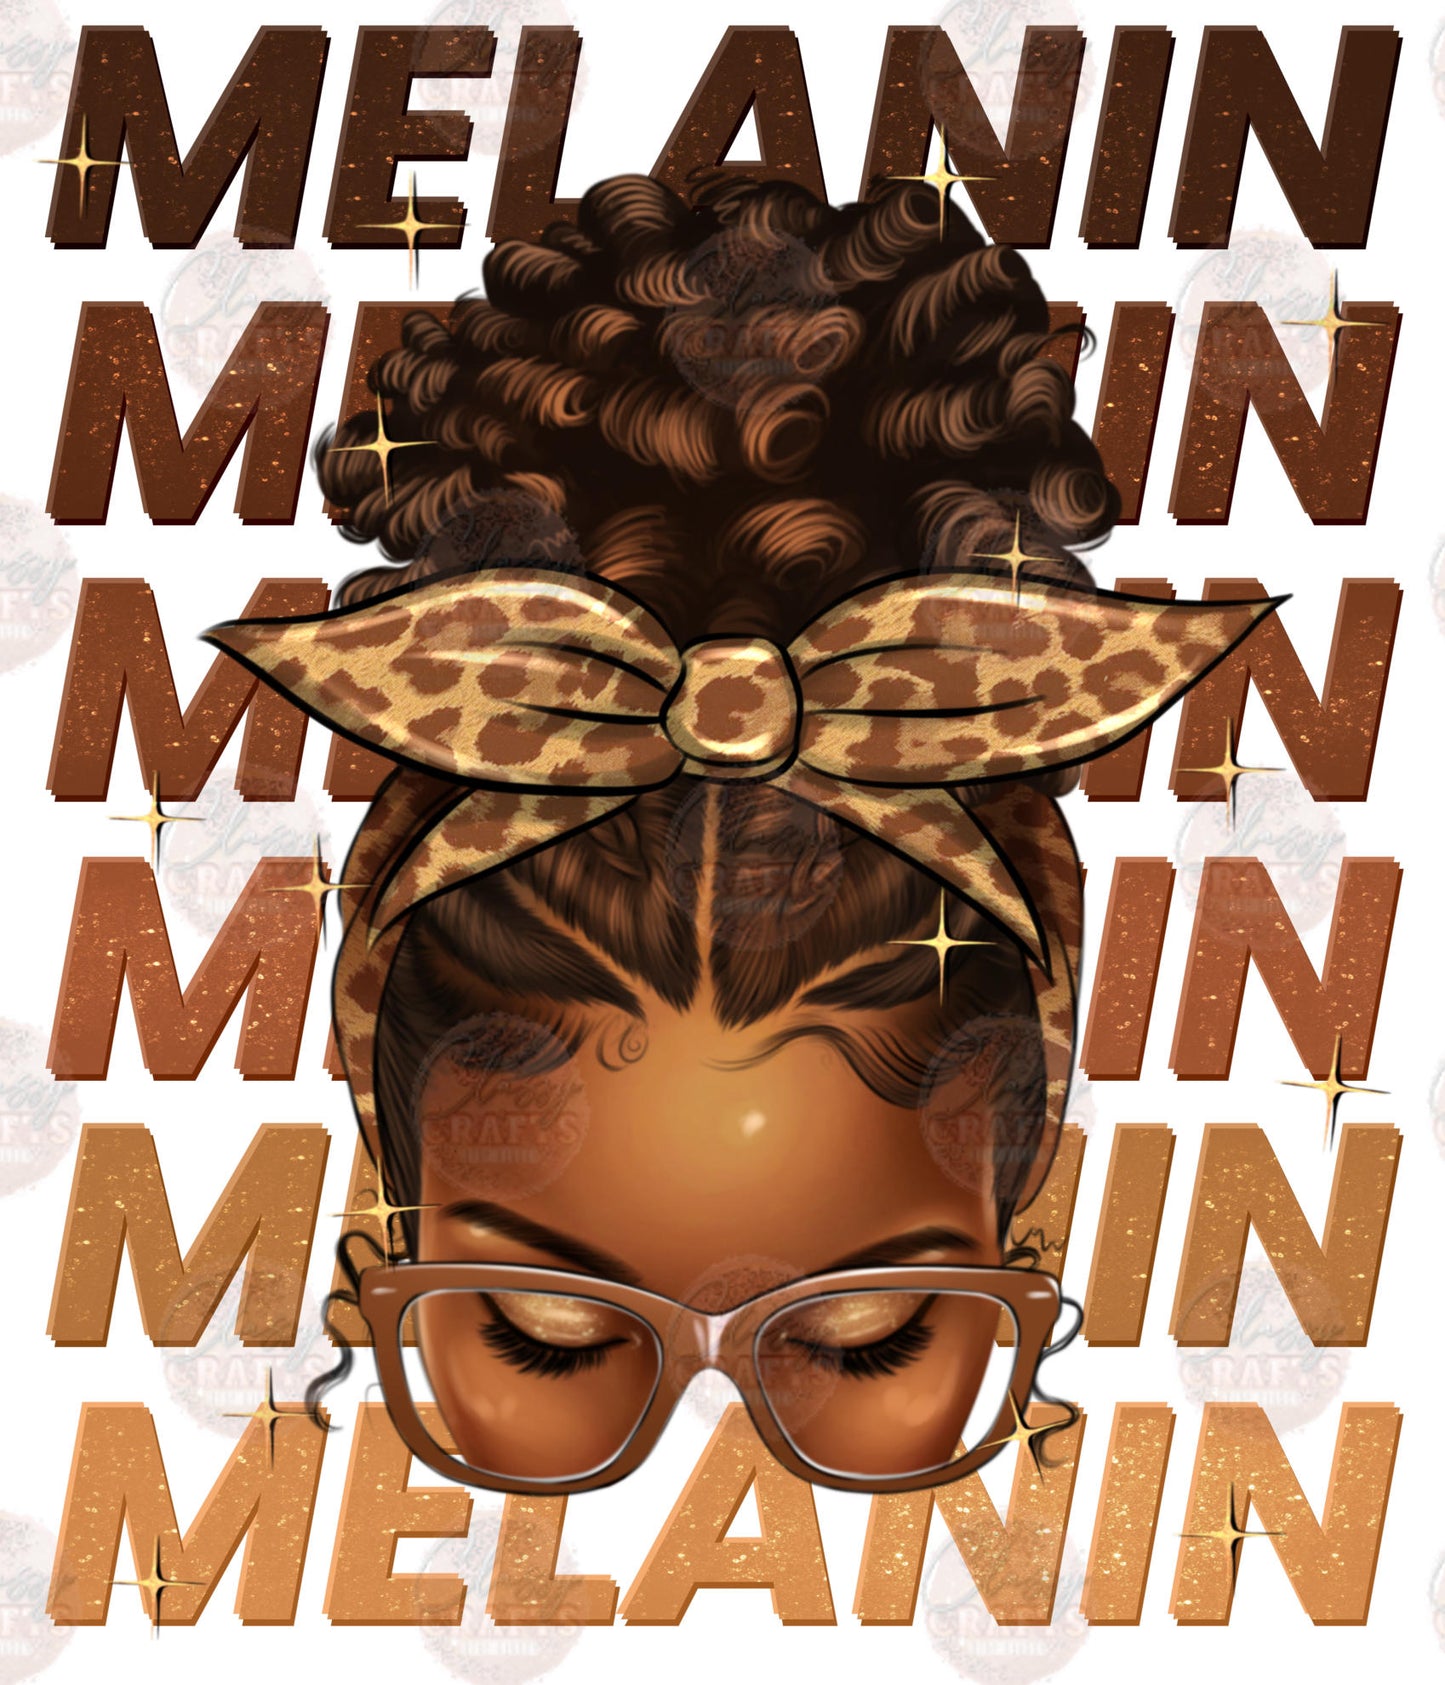 Melanin Afro Mess Bun Transfers